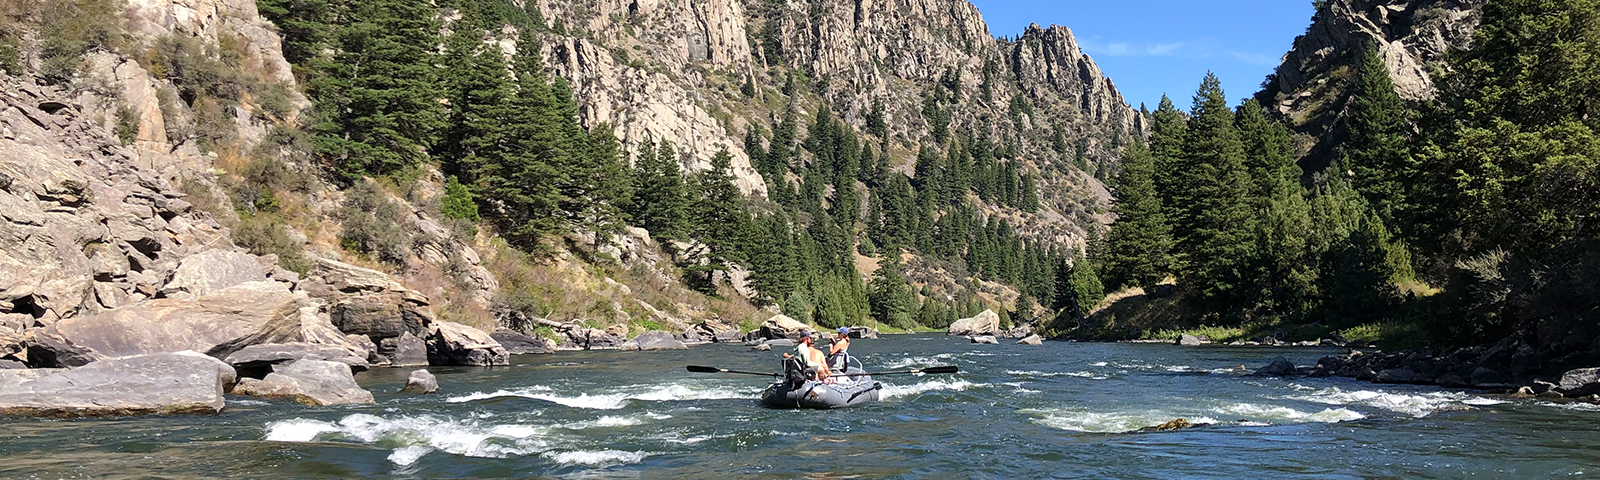 rafting-montana copy